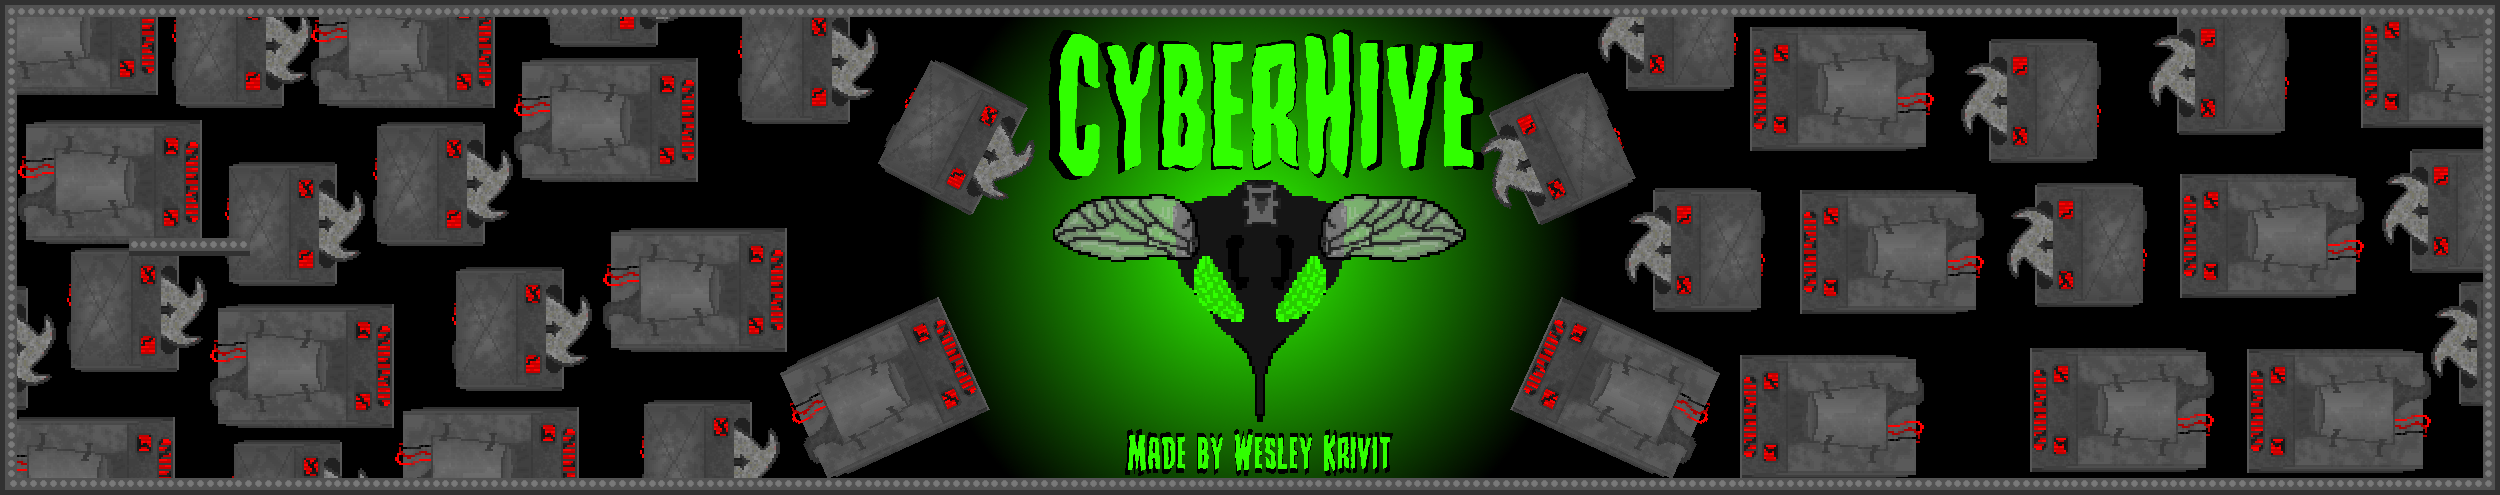 Cyber Hive